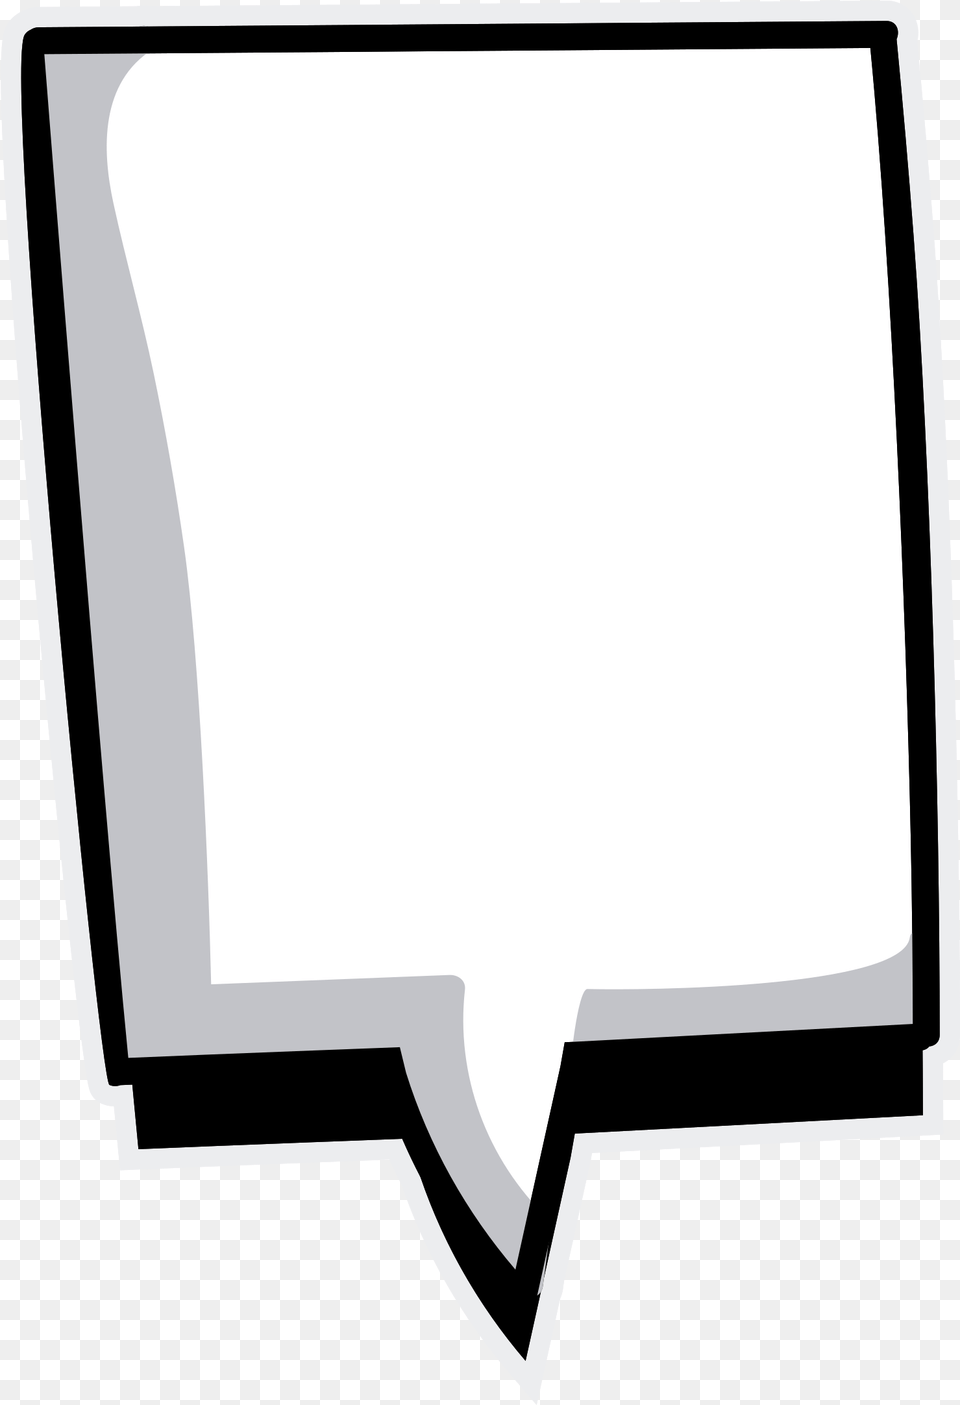 Speech Bubble With Background Horizontal, Logo, Blackboard, Electronics, Screen Png Image